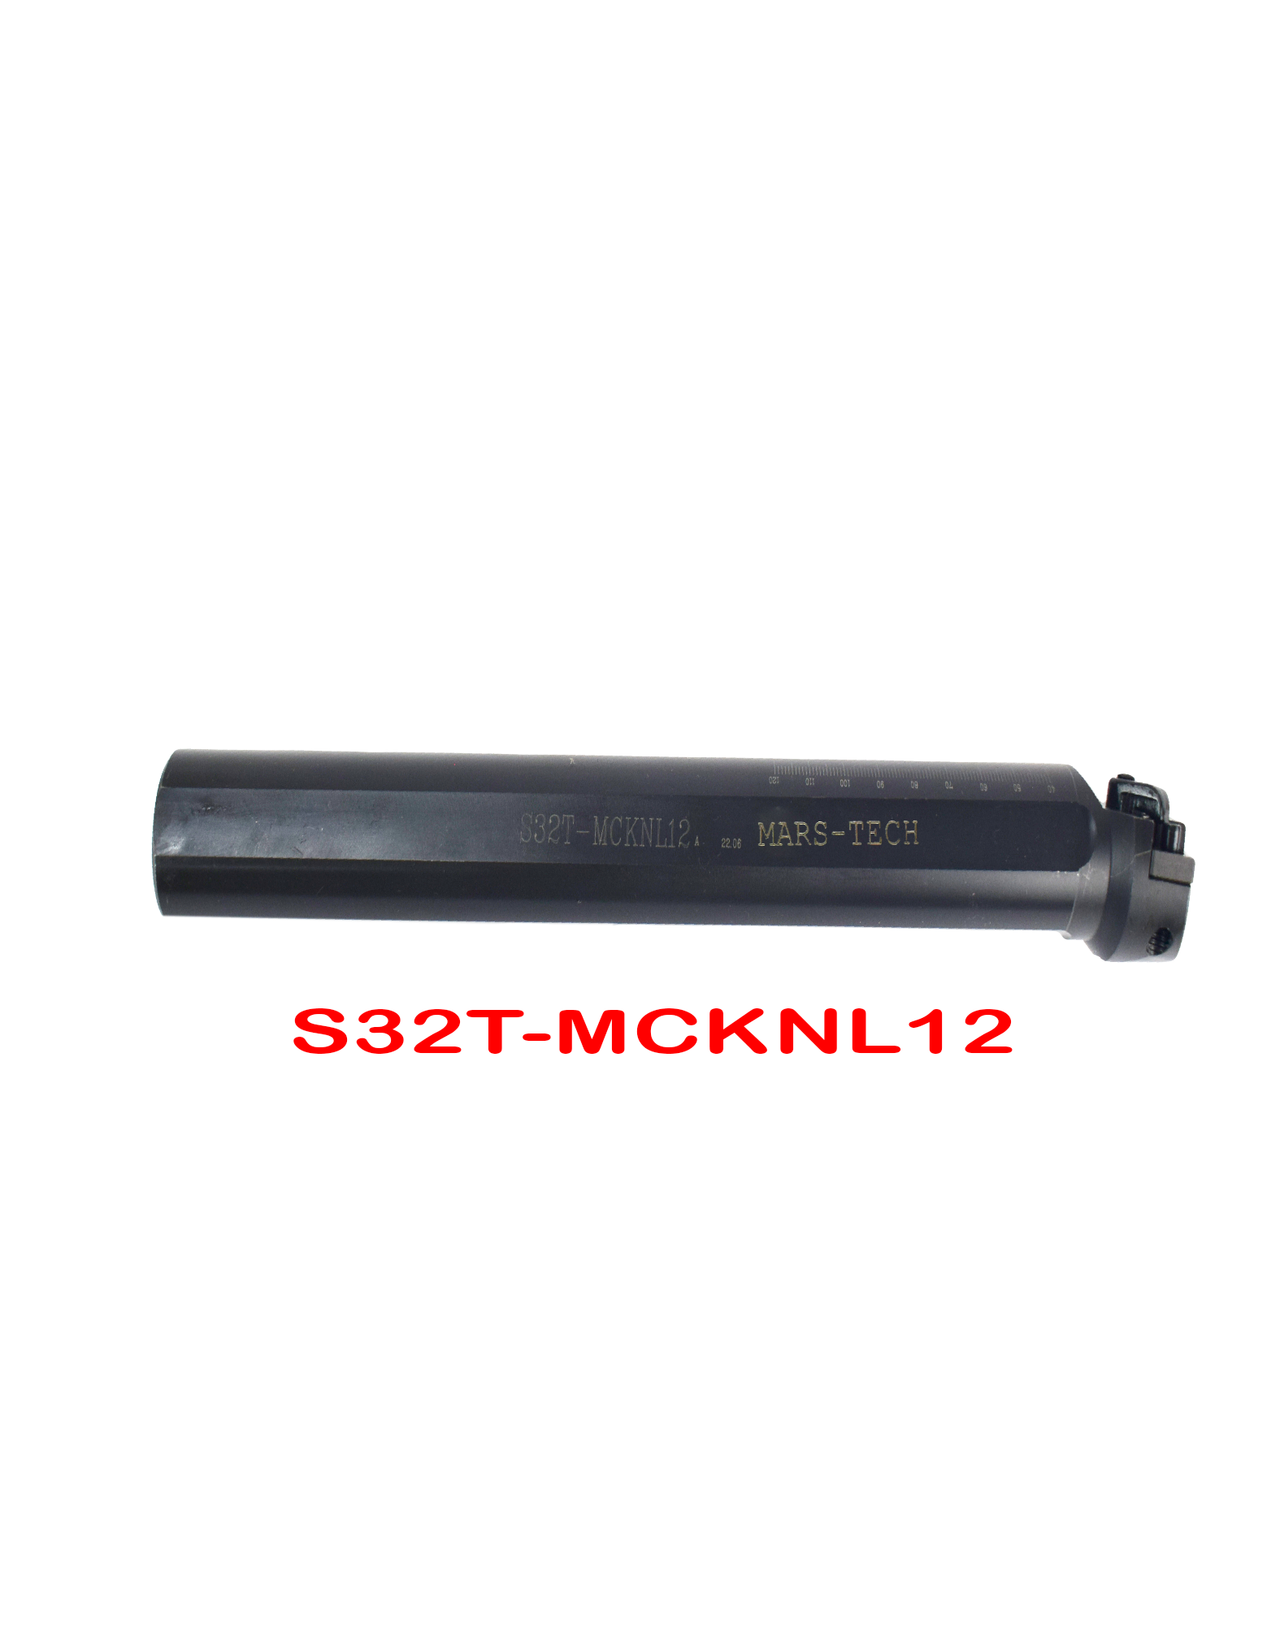 MCKNL/R CNMG1204 other edge boring bar  Boring Bar dia 20/25/32 pack of 1